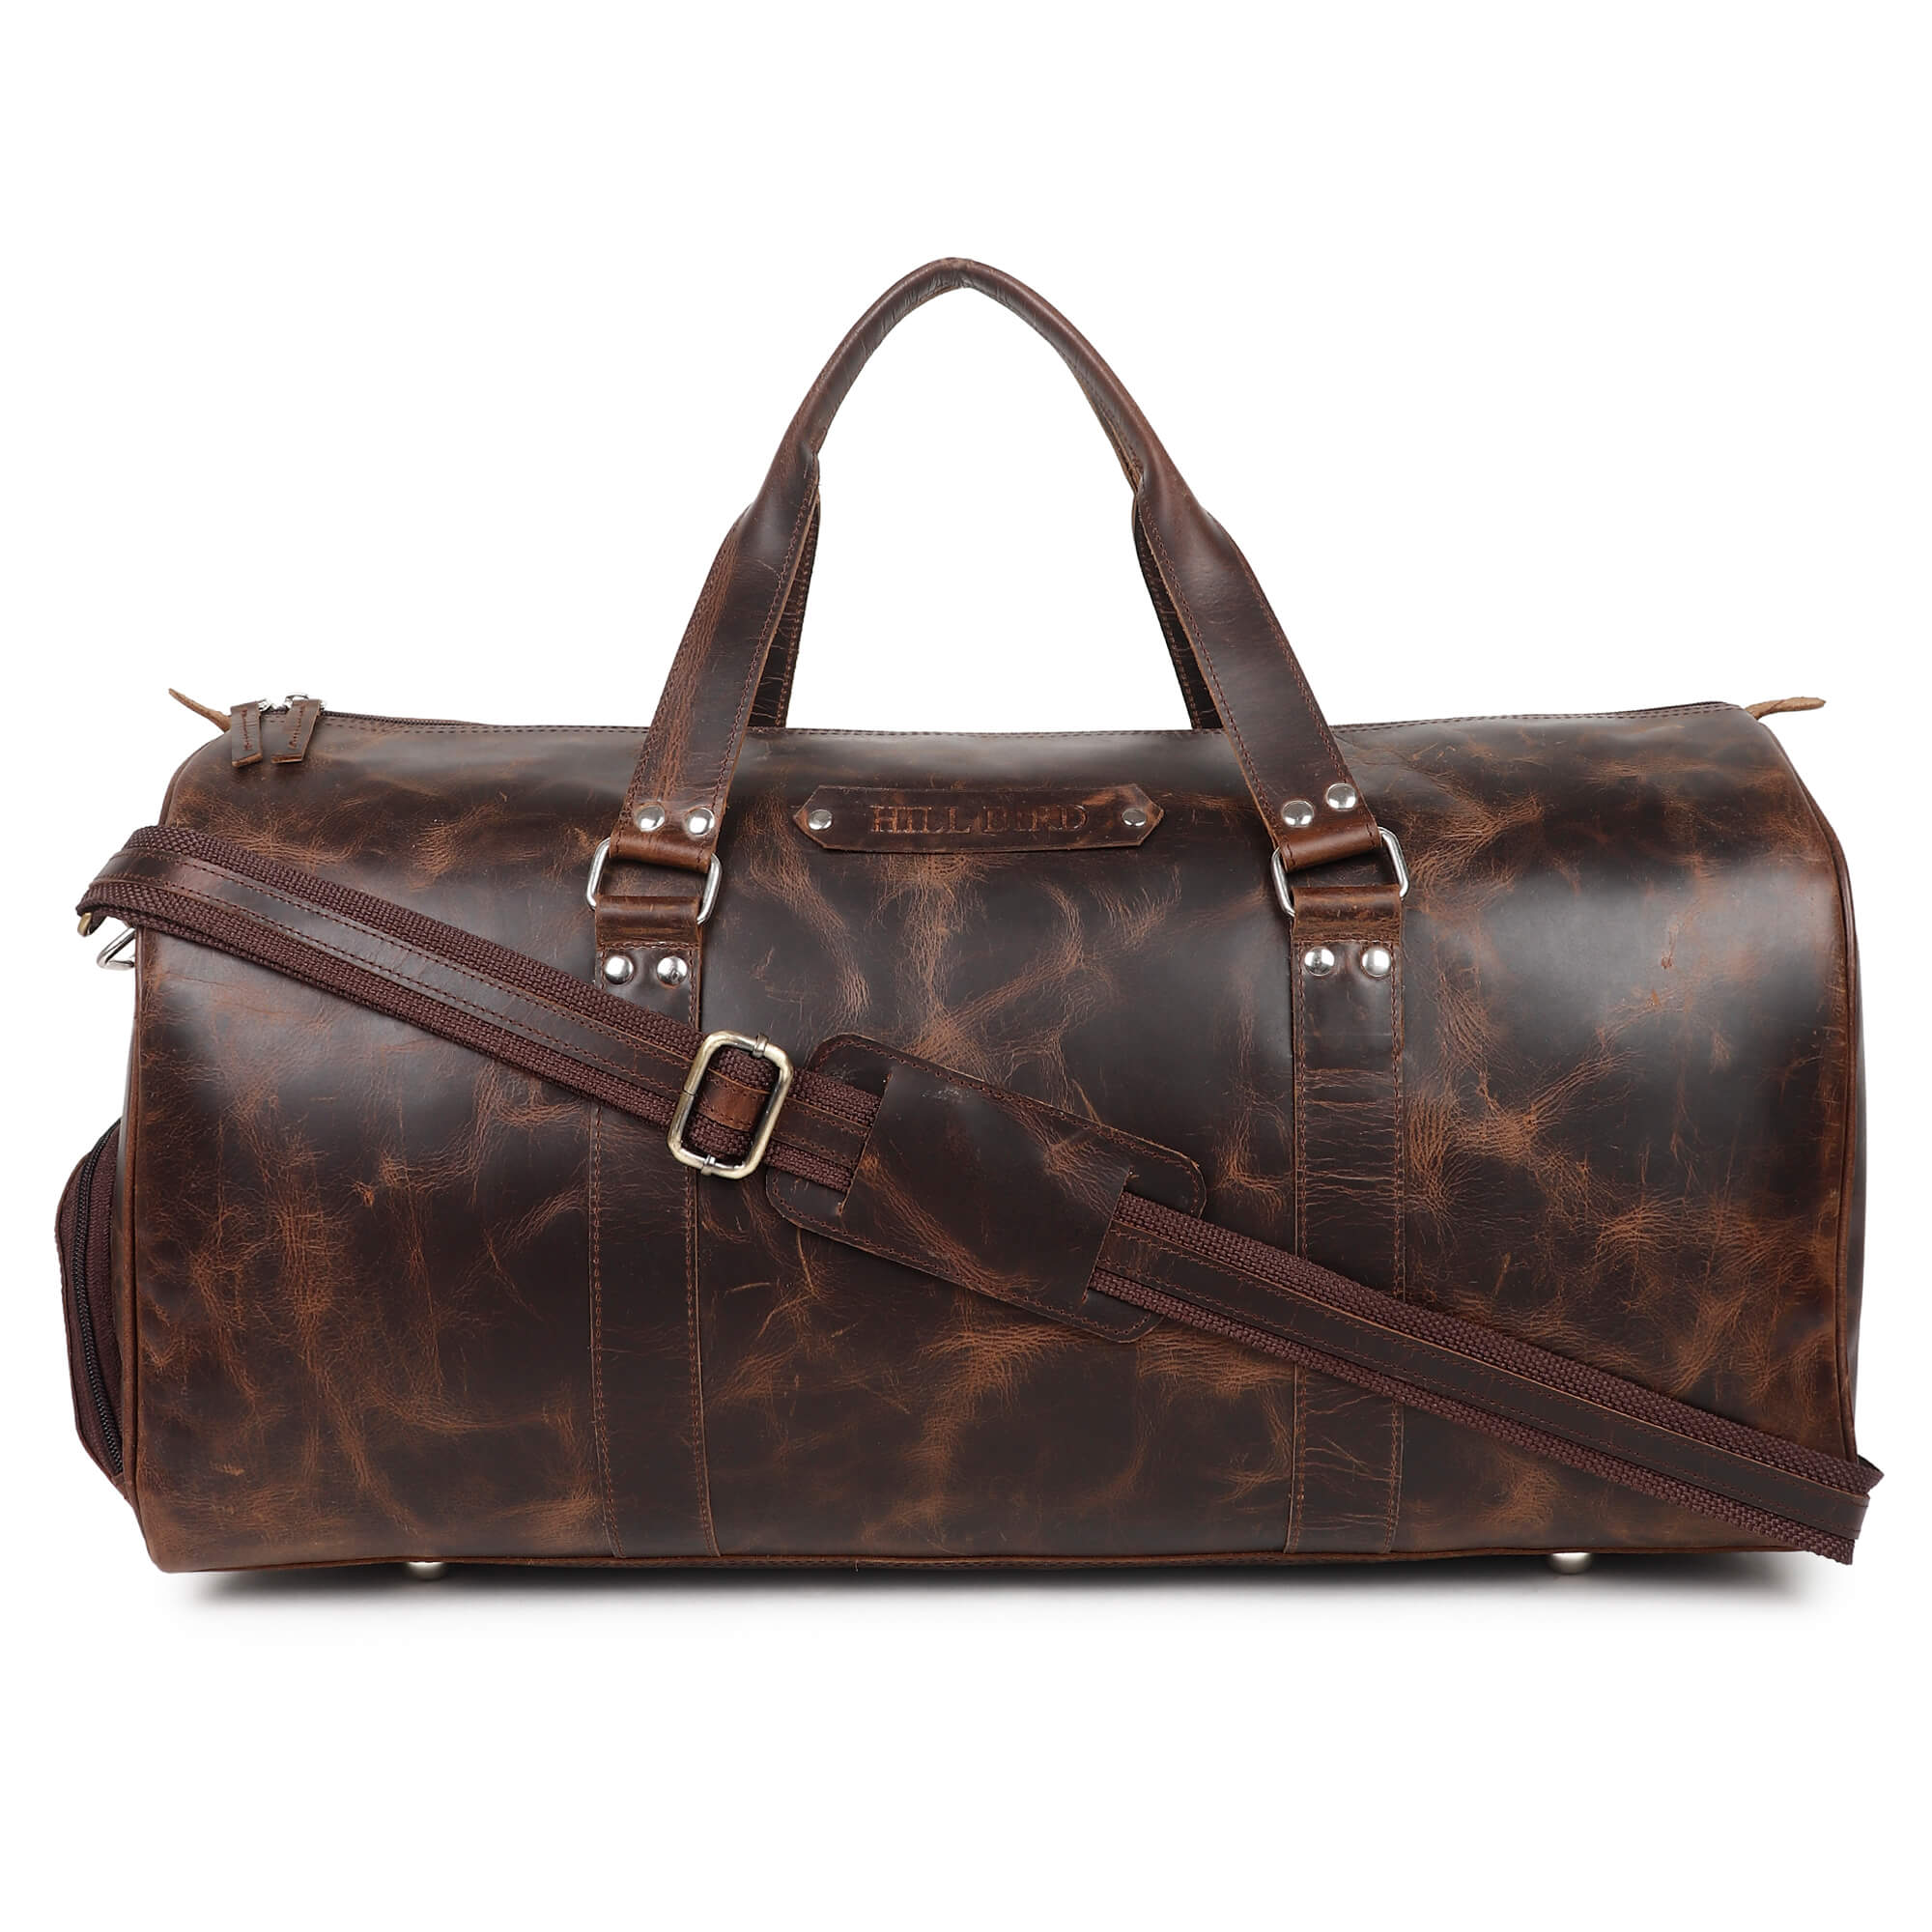 HILLBIRD Aliver Crunch Brown Leather Duffel Bag